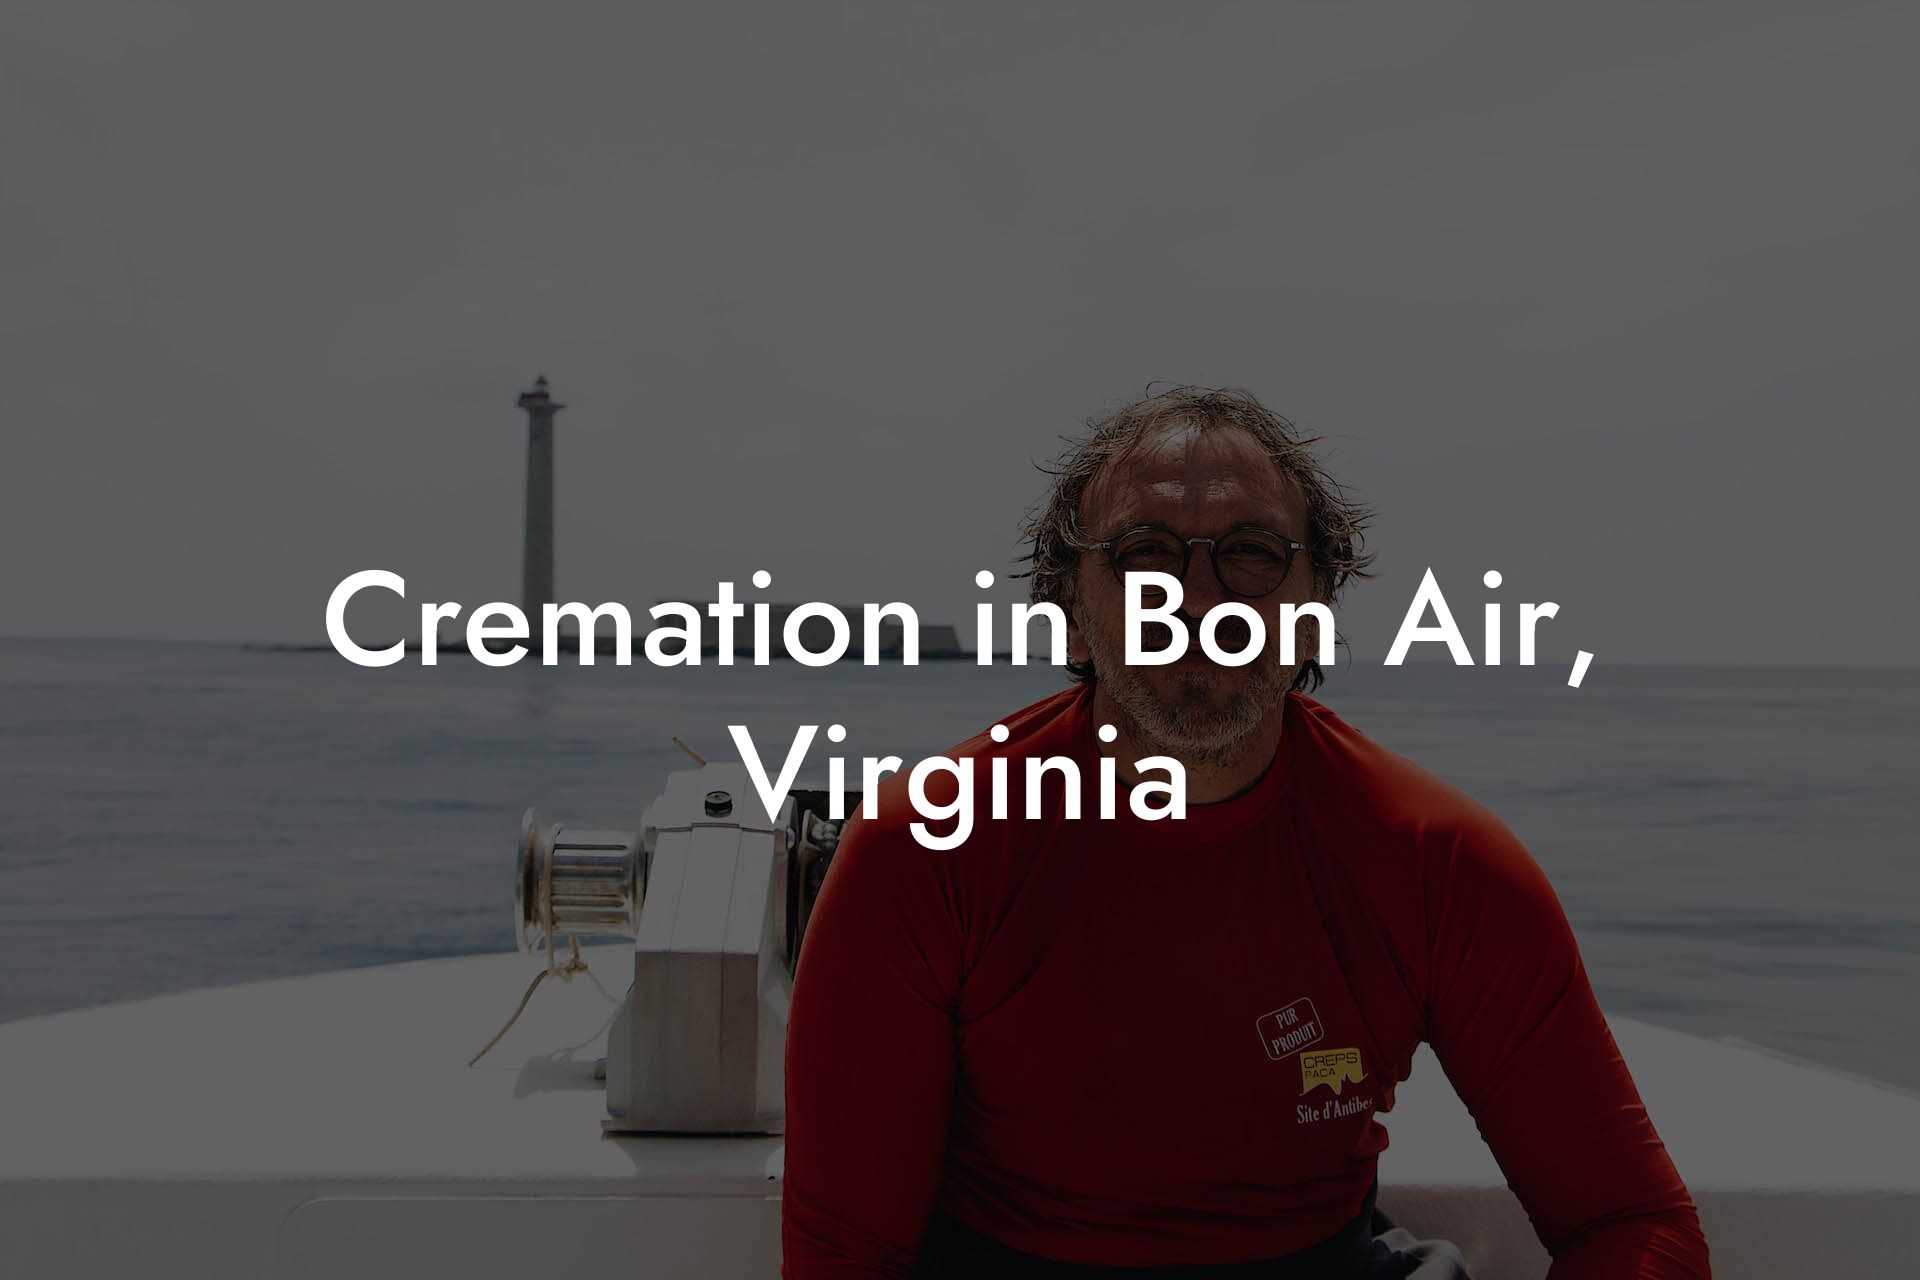 Cremation in Bon Air, Virginia